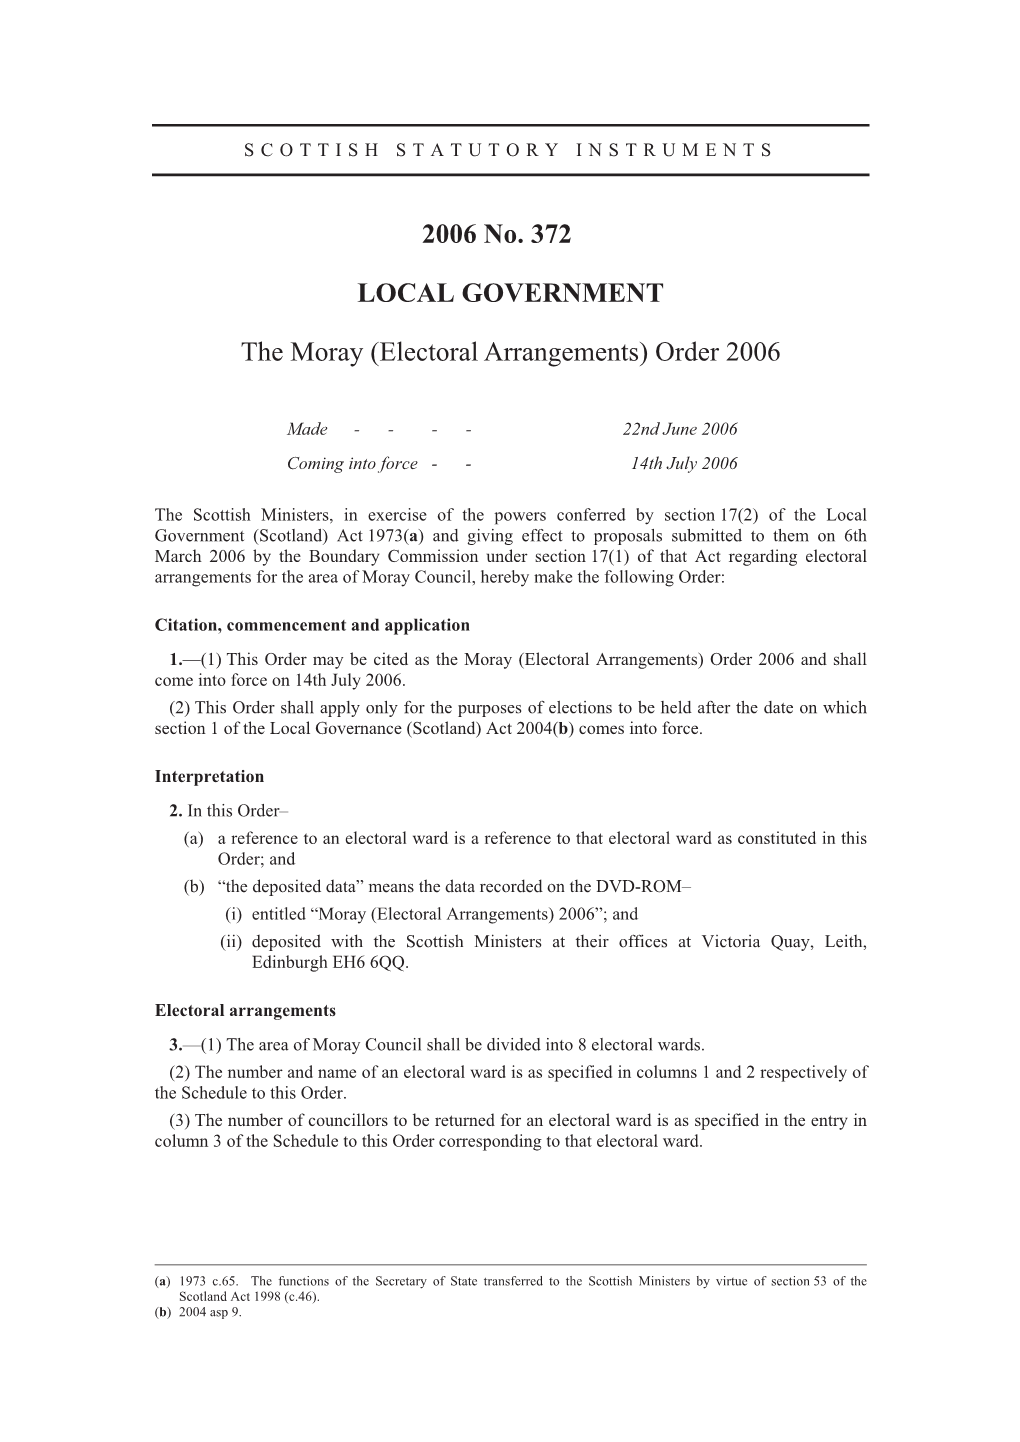 2006 No. 372 LOCAL GOVERNMENT the Moray